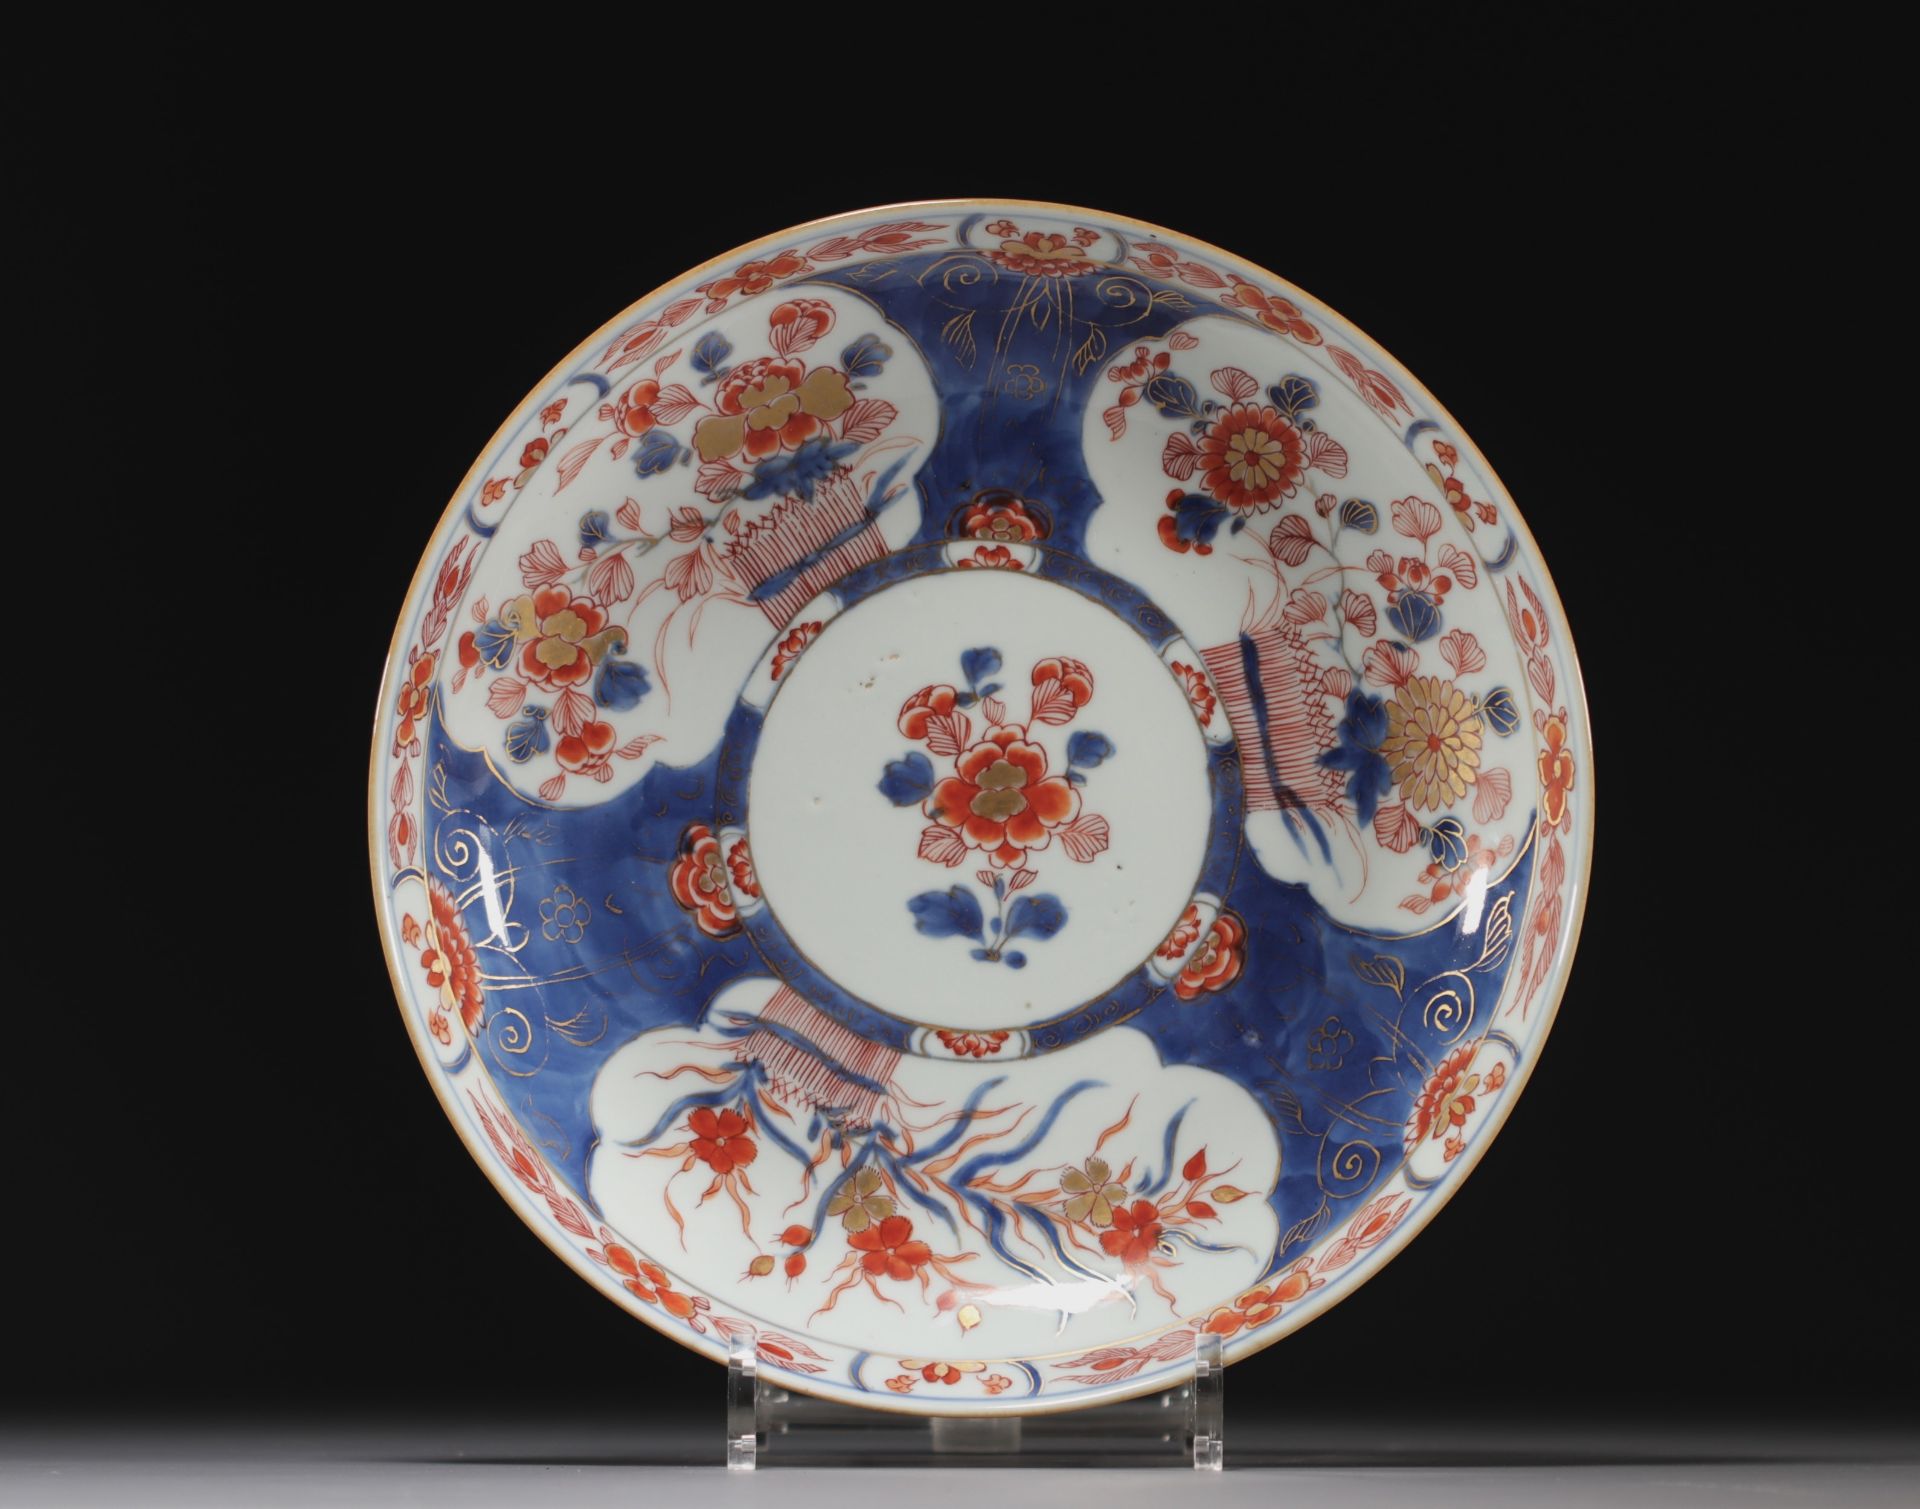 China - Porcelain plate, Imari design, 18th century.